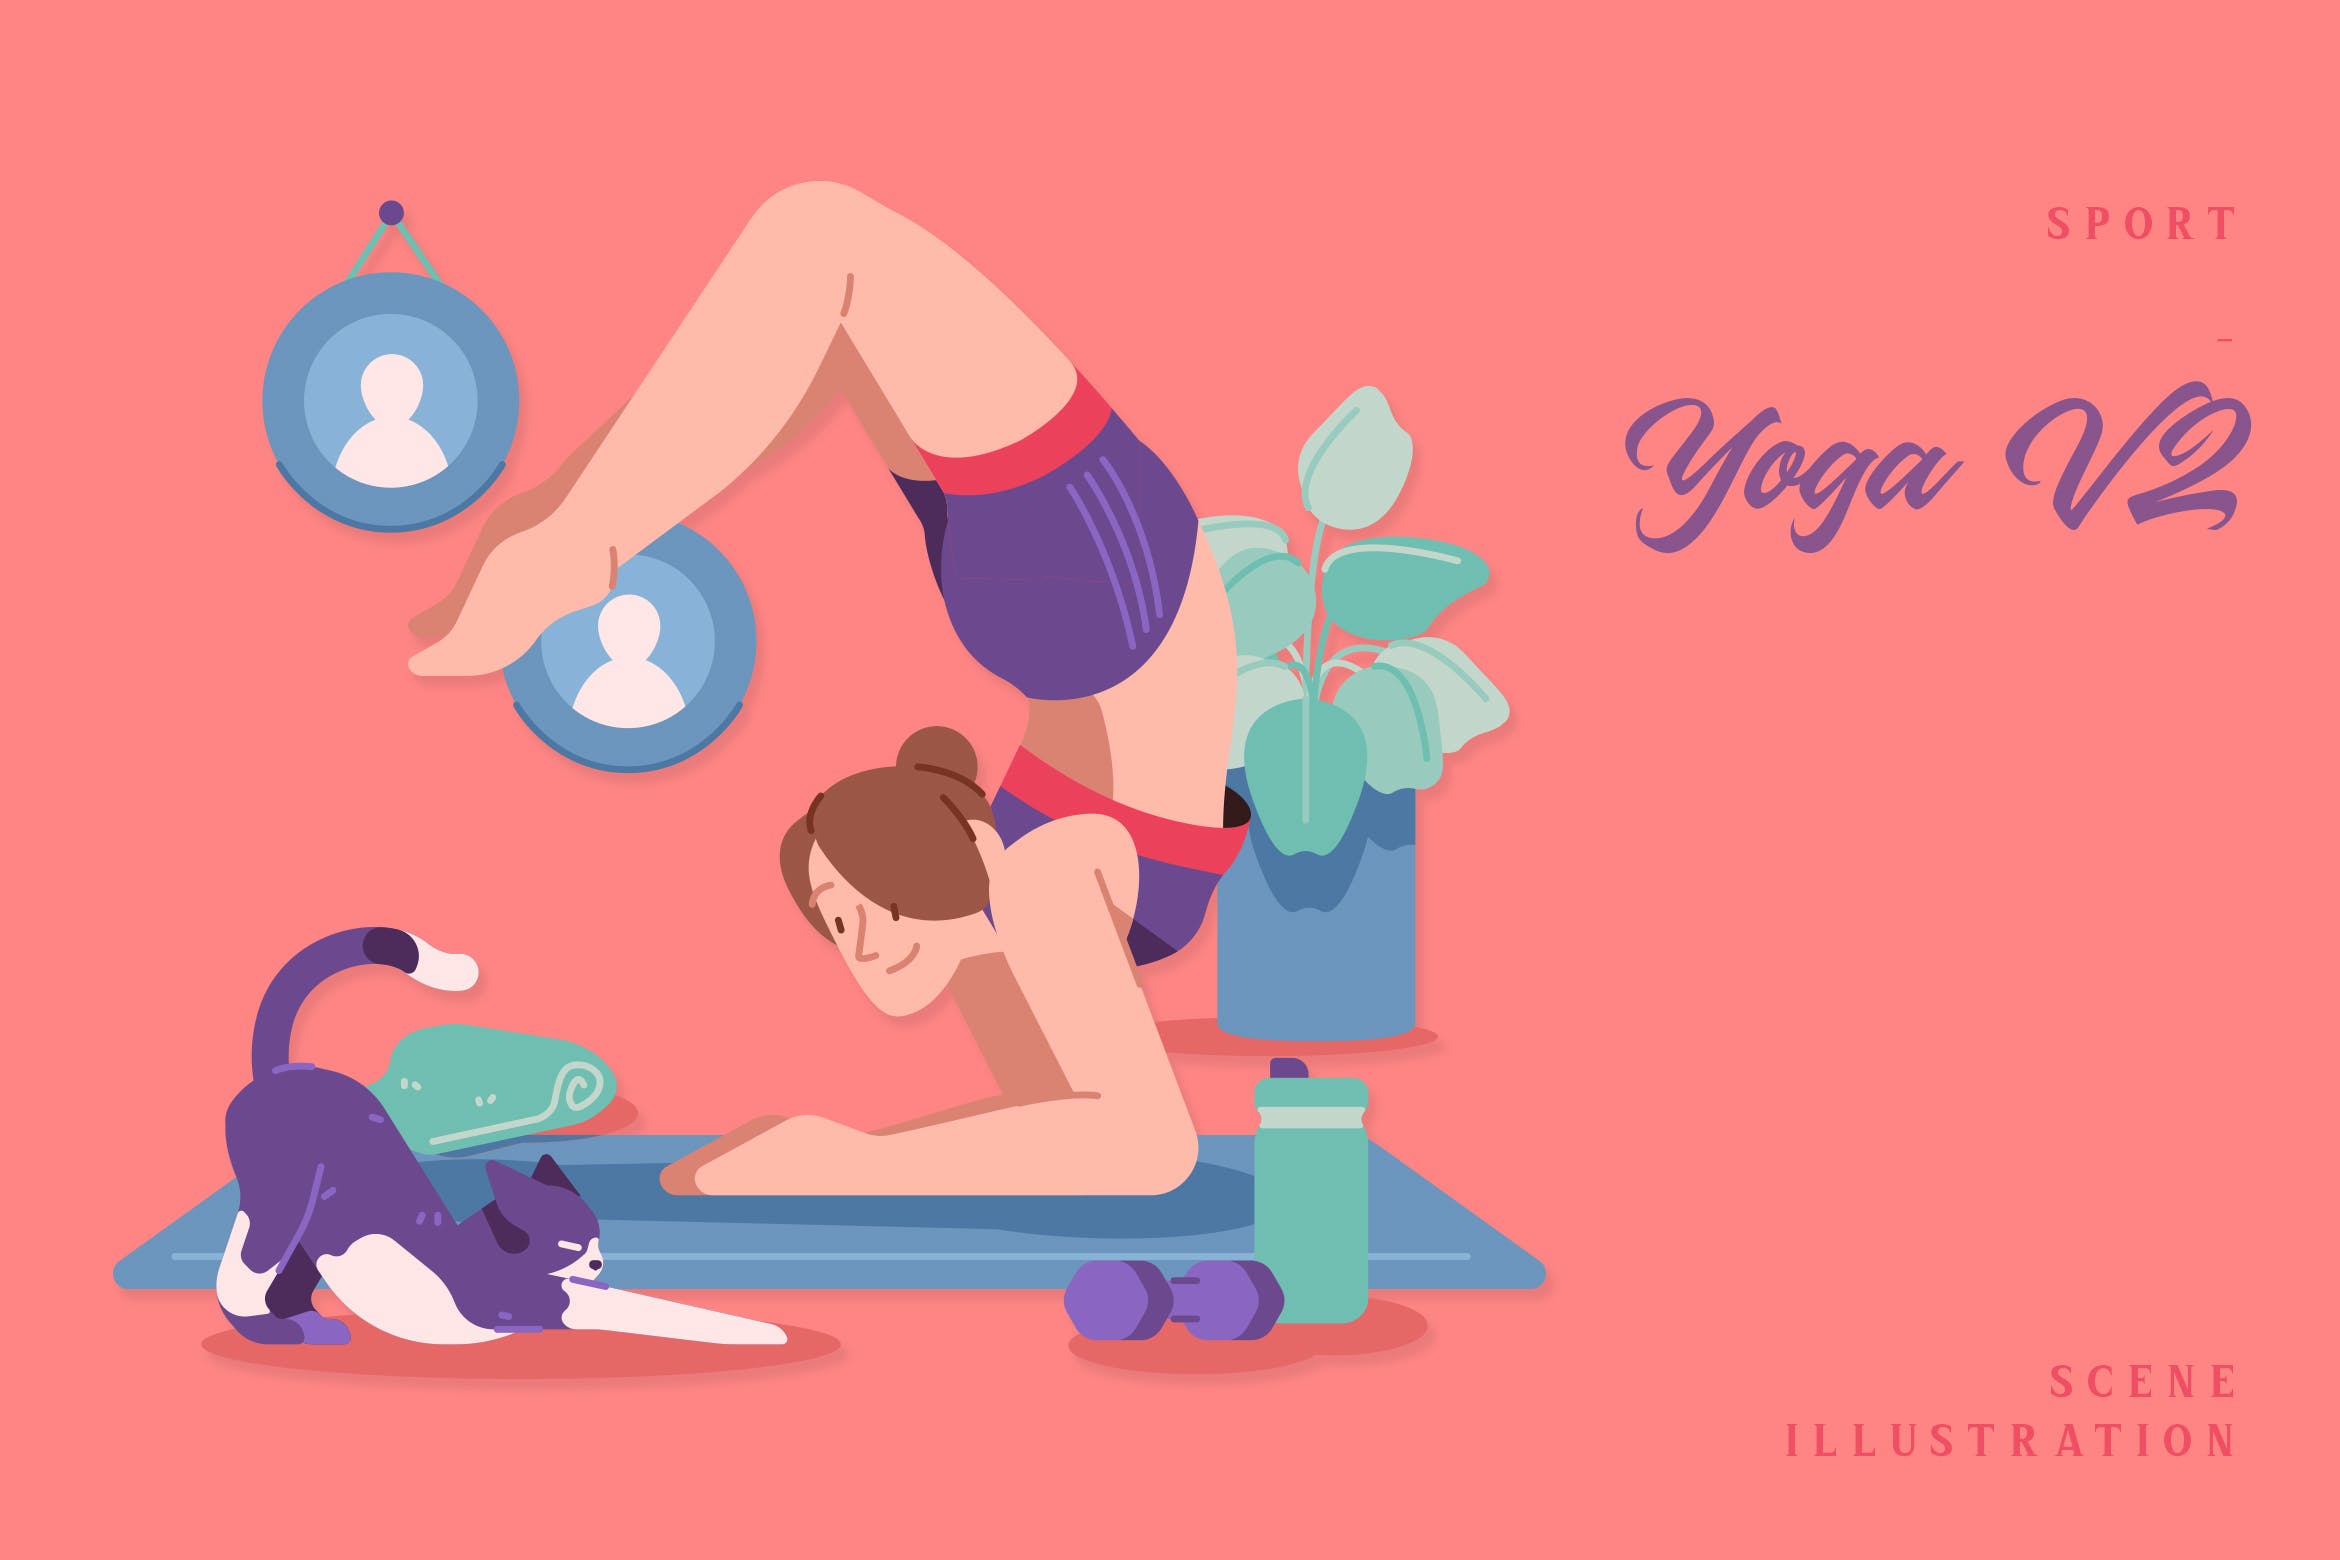 瑜伽运动场景插画v2 Sport – Yoga V2 Scene Illustration 图片素材 第1张